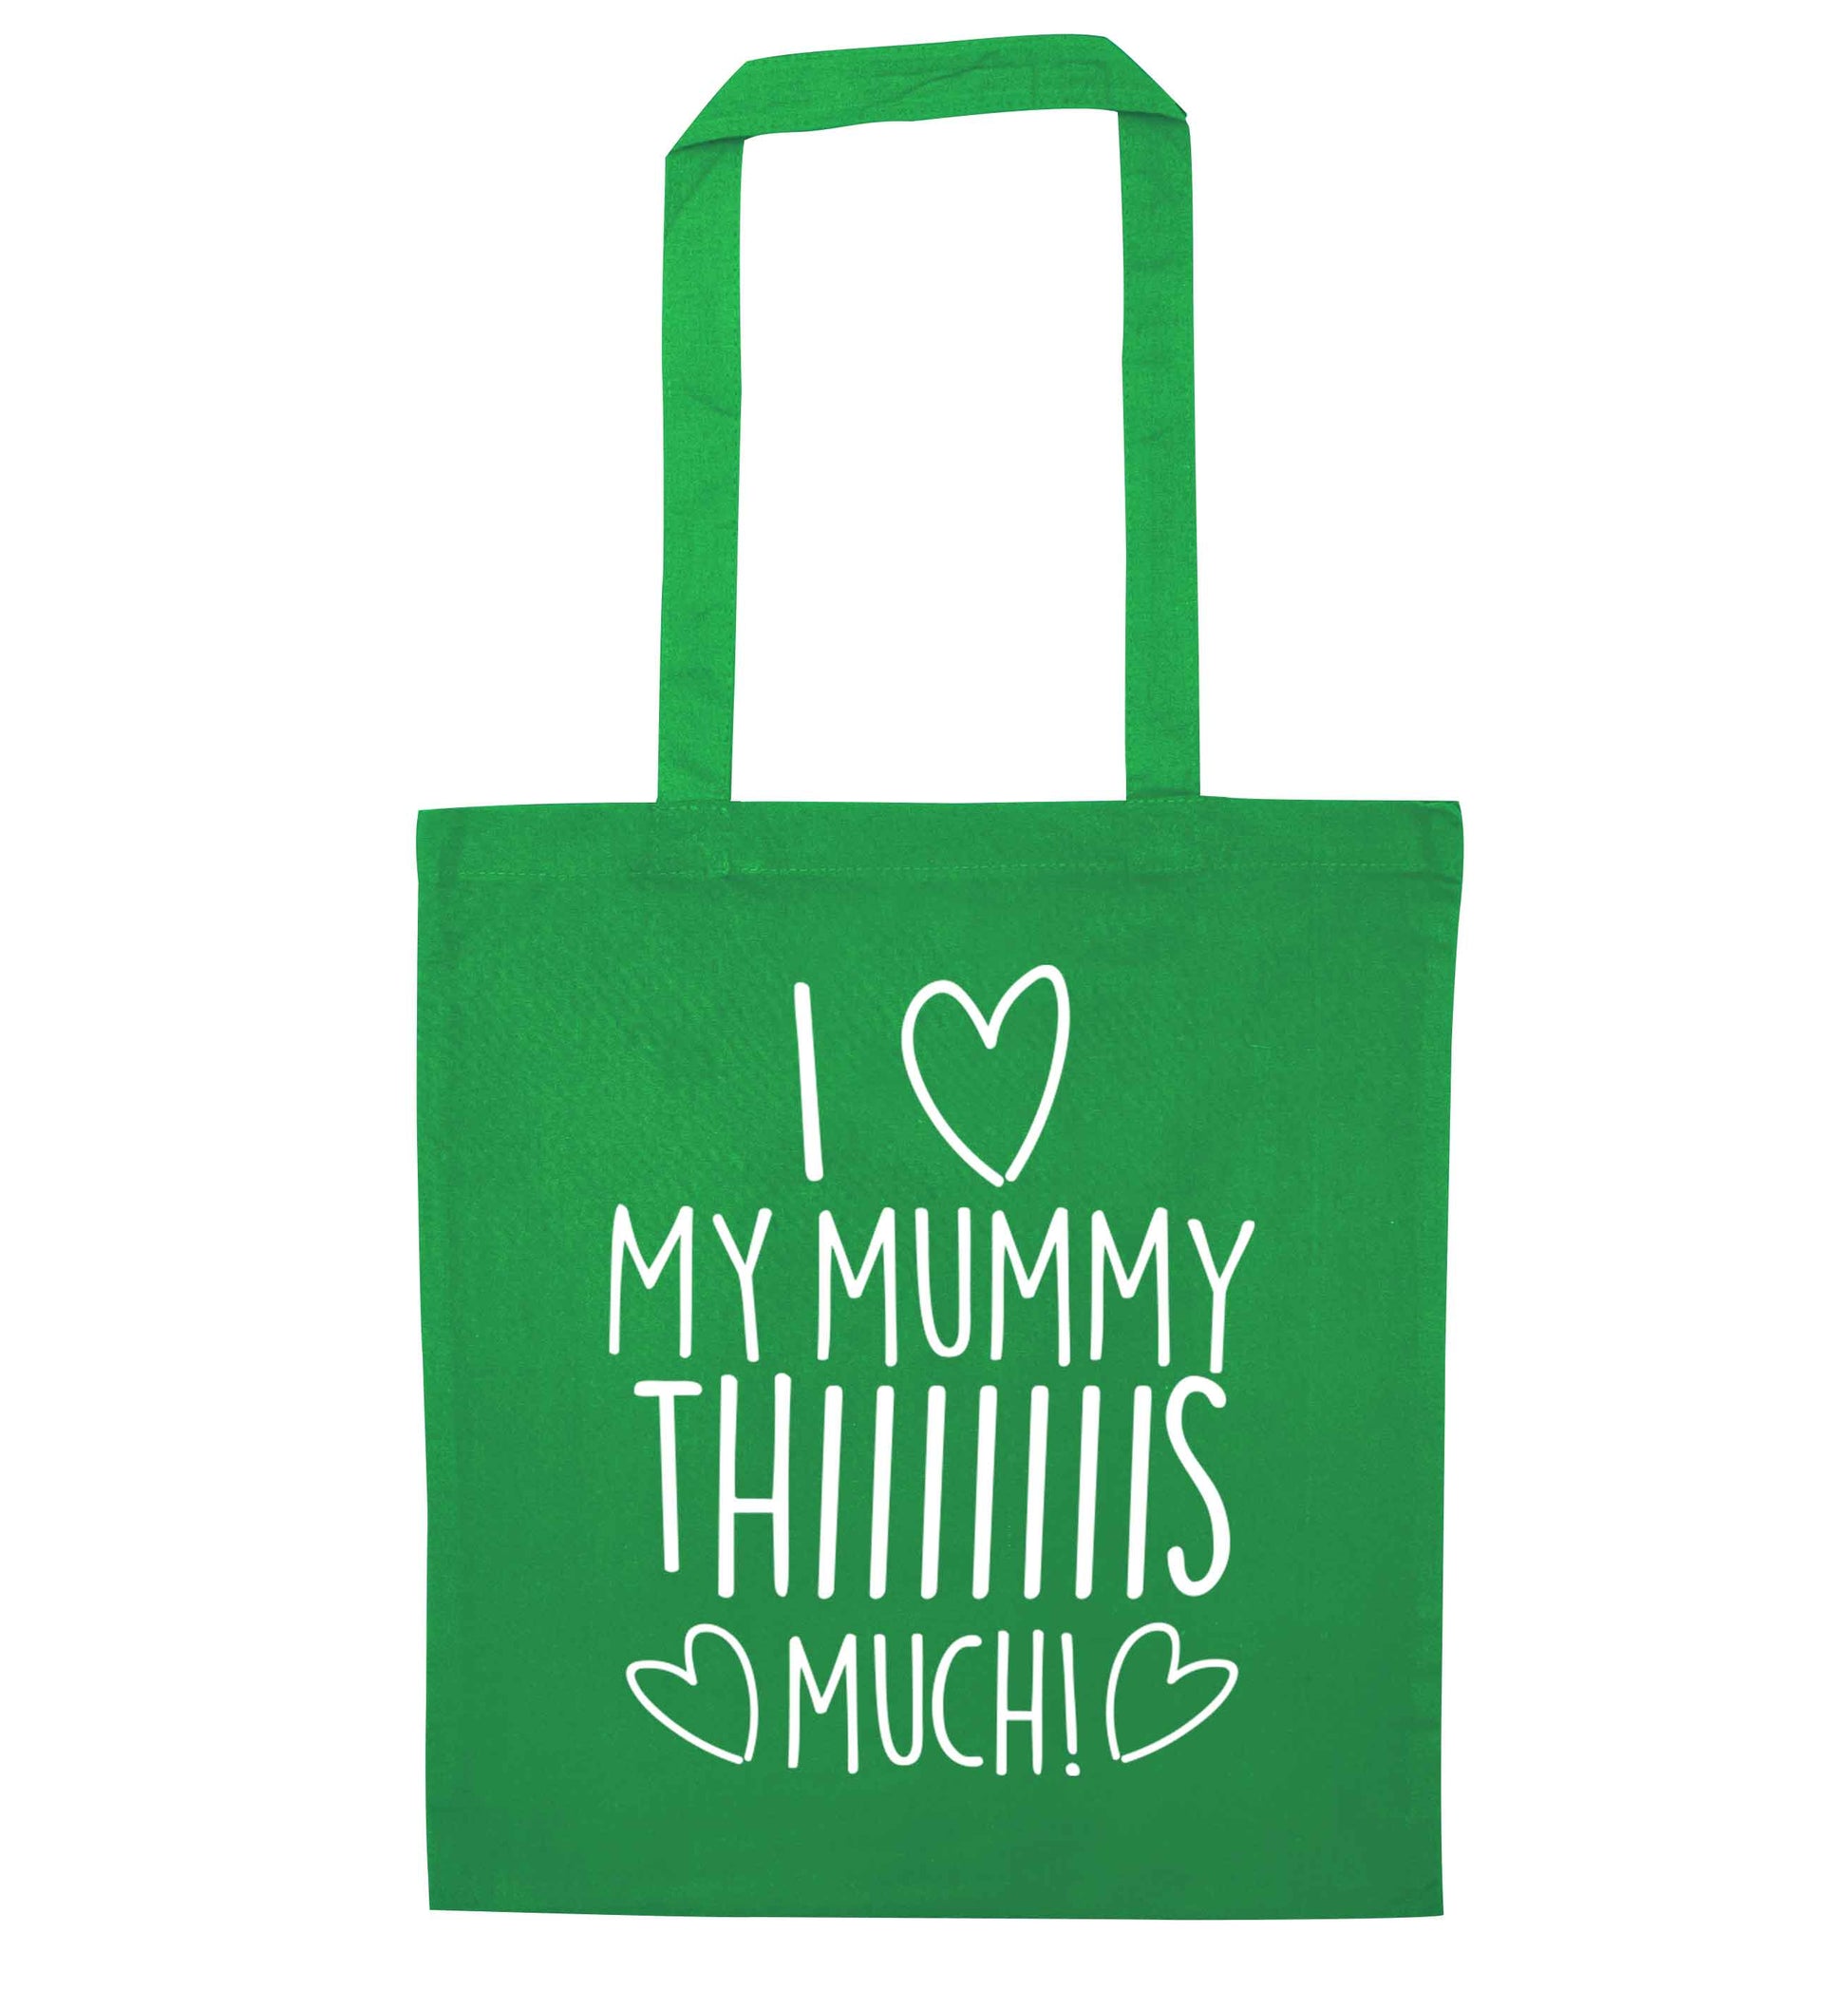 I love my mummy thiiiiis much! green tote bag